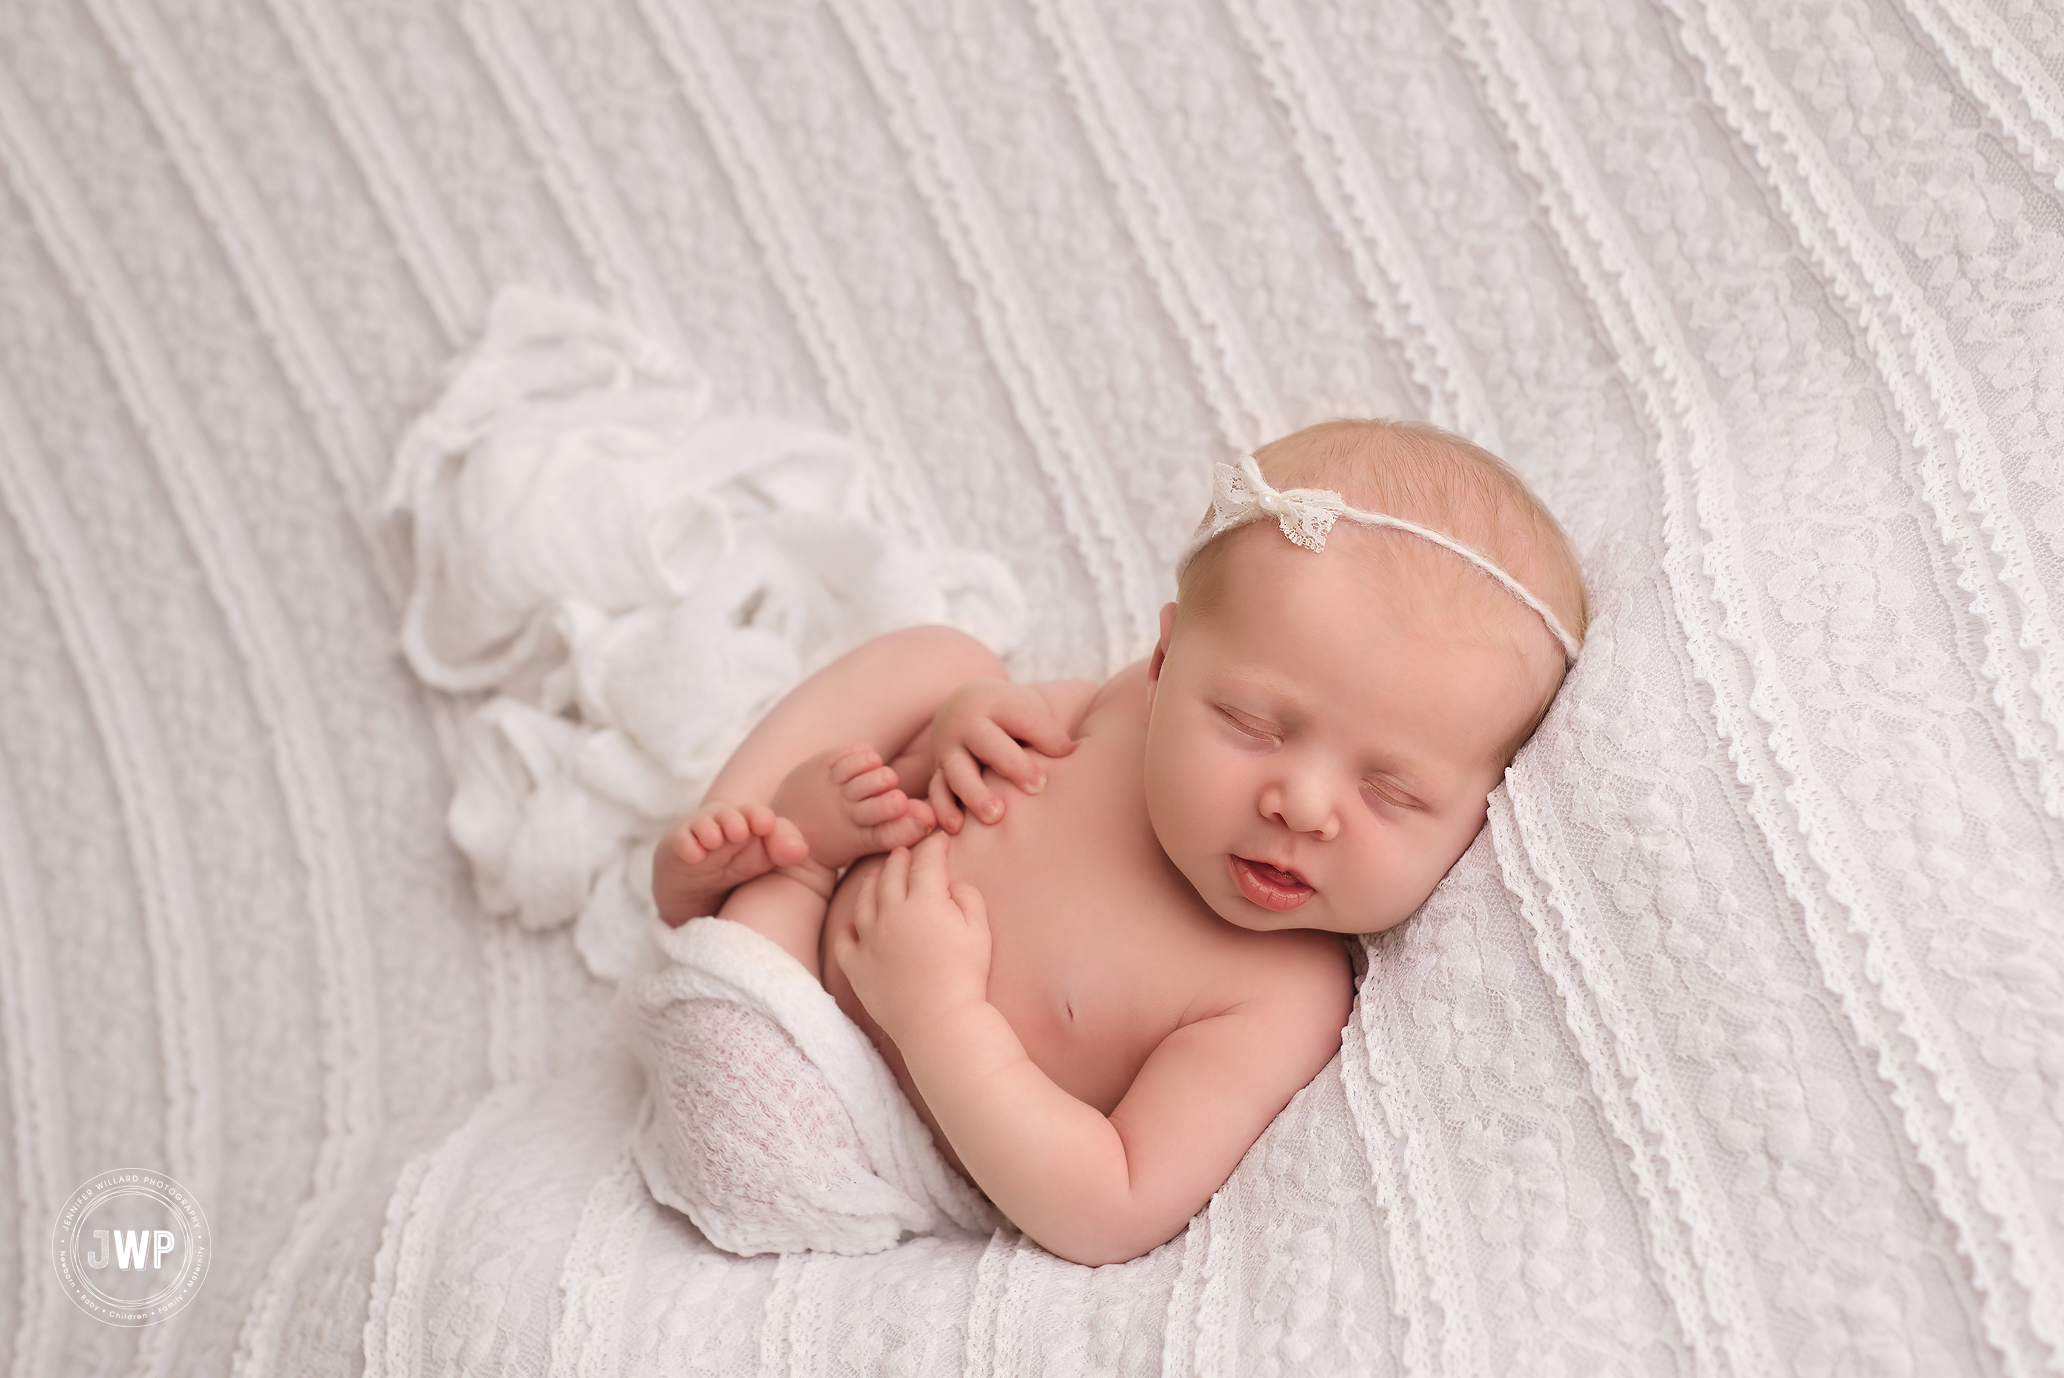 white lace blanket newborn girl Kingston baby photographer